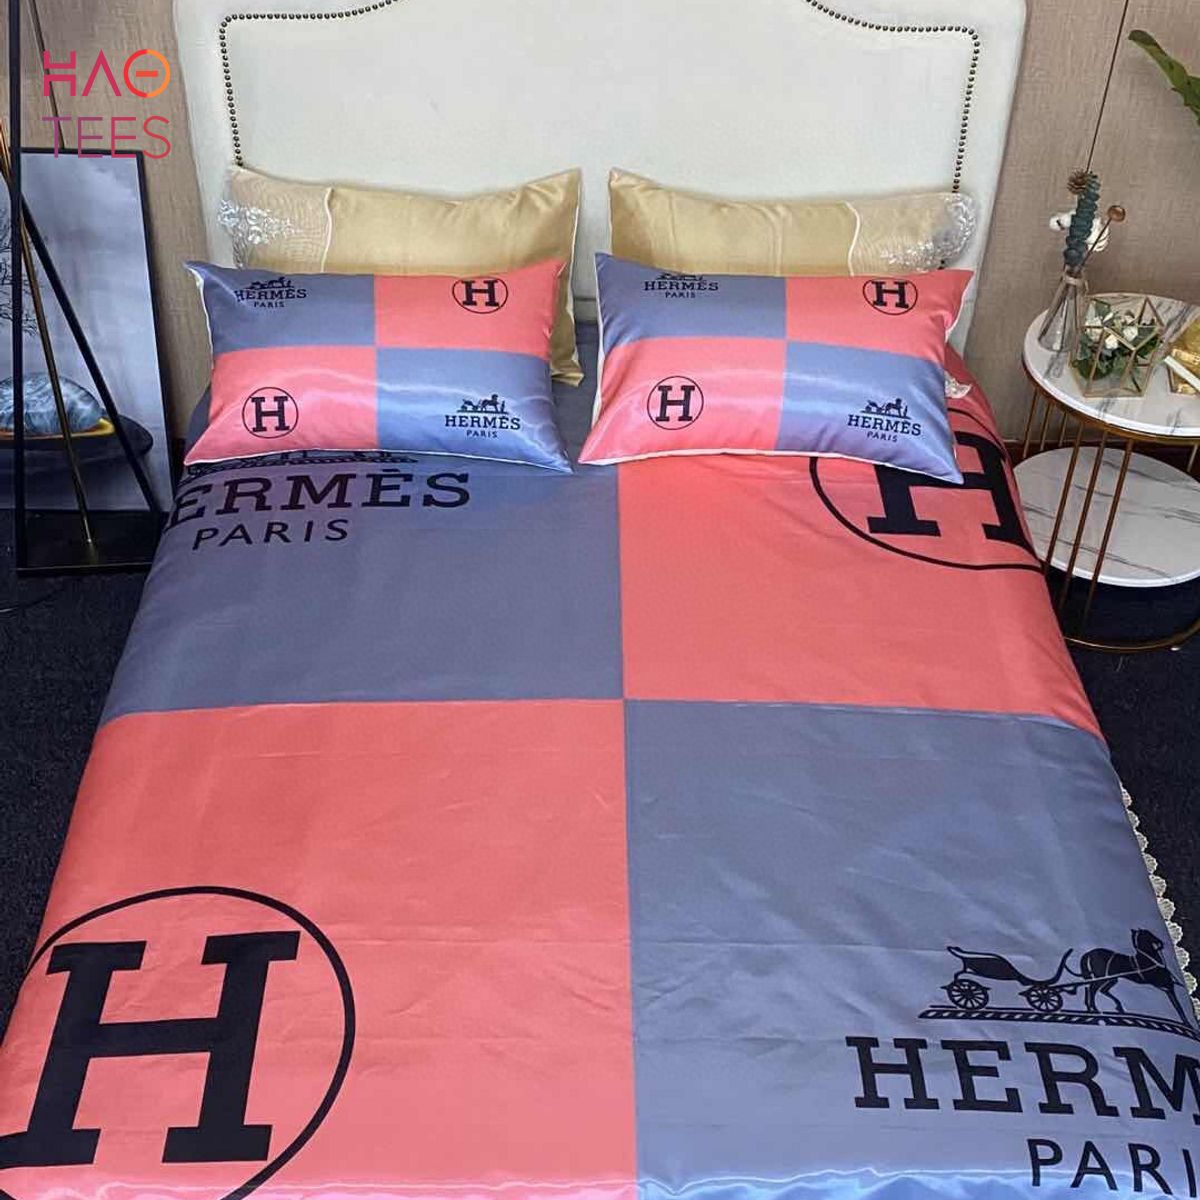 BEST Hermes Paris Luxury Brand Bedding Sets And Bedroom Sets Limited